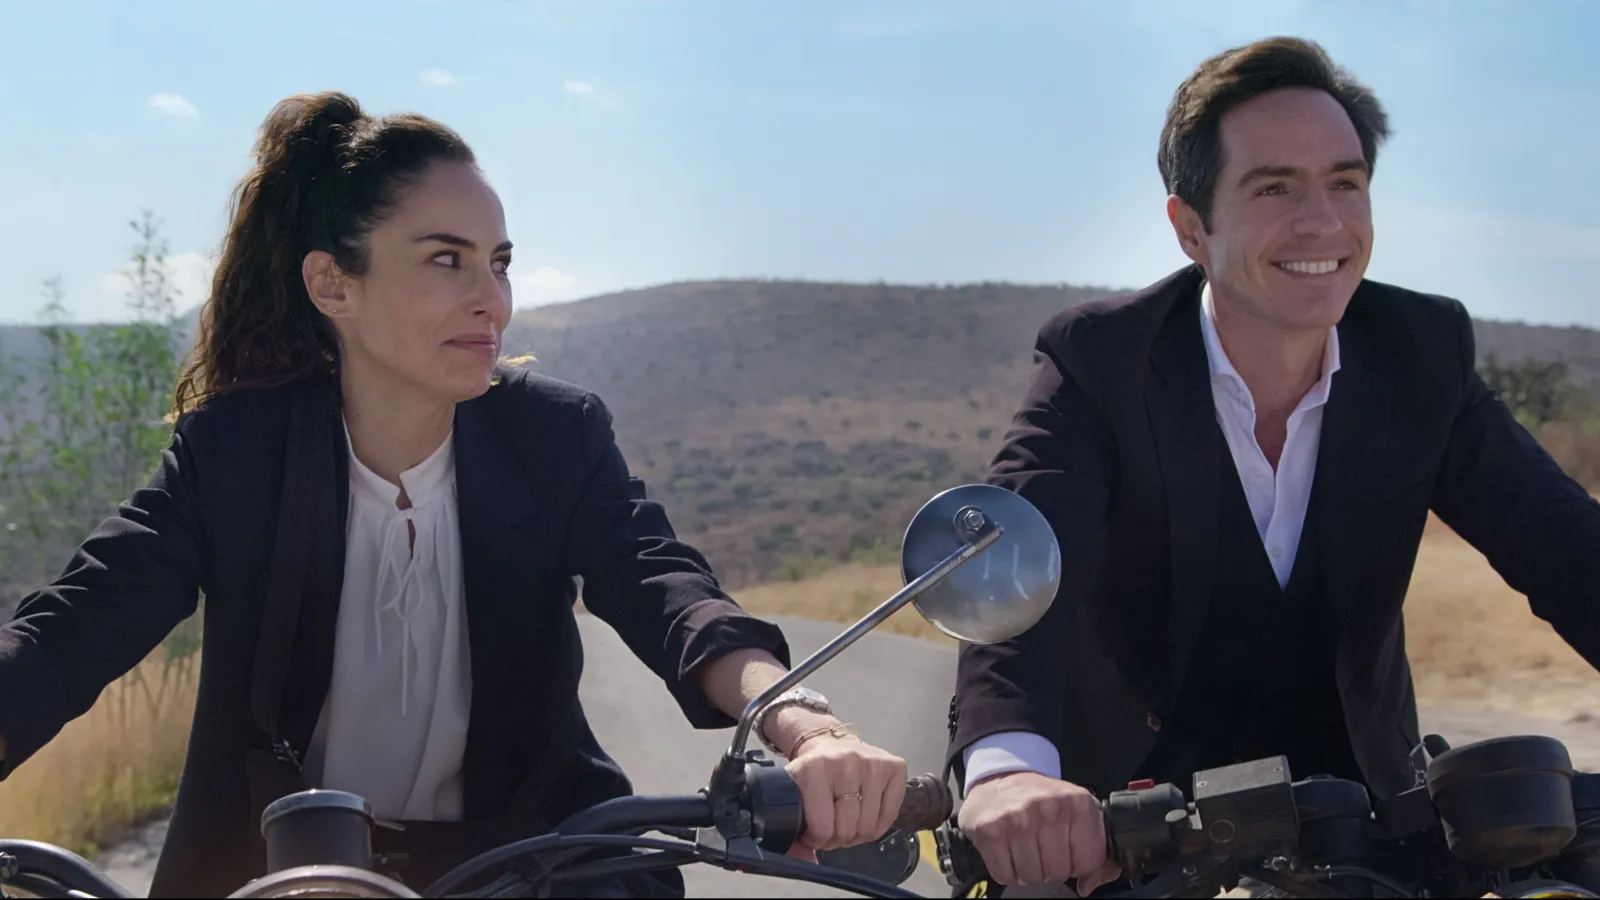 Partout ou on ira - Partout où on ira : ce road movie fraternel porté par Ana Serradilla et Mauricio Ochman arrive en février sur Netflix